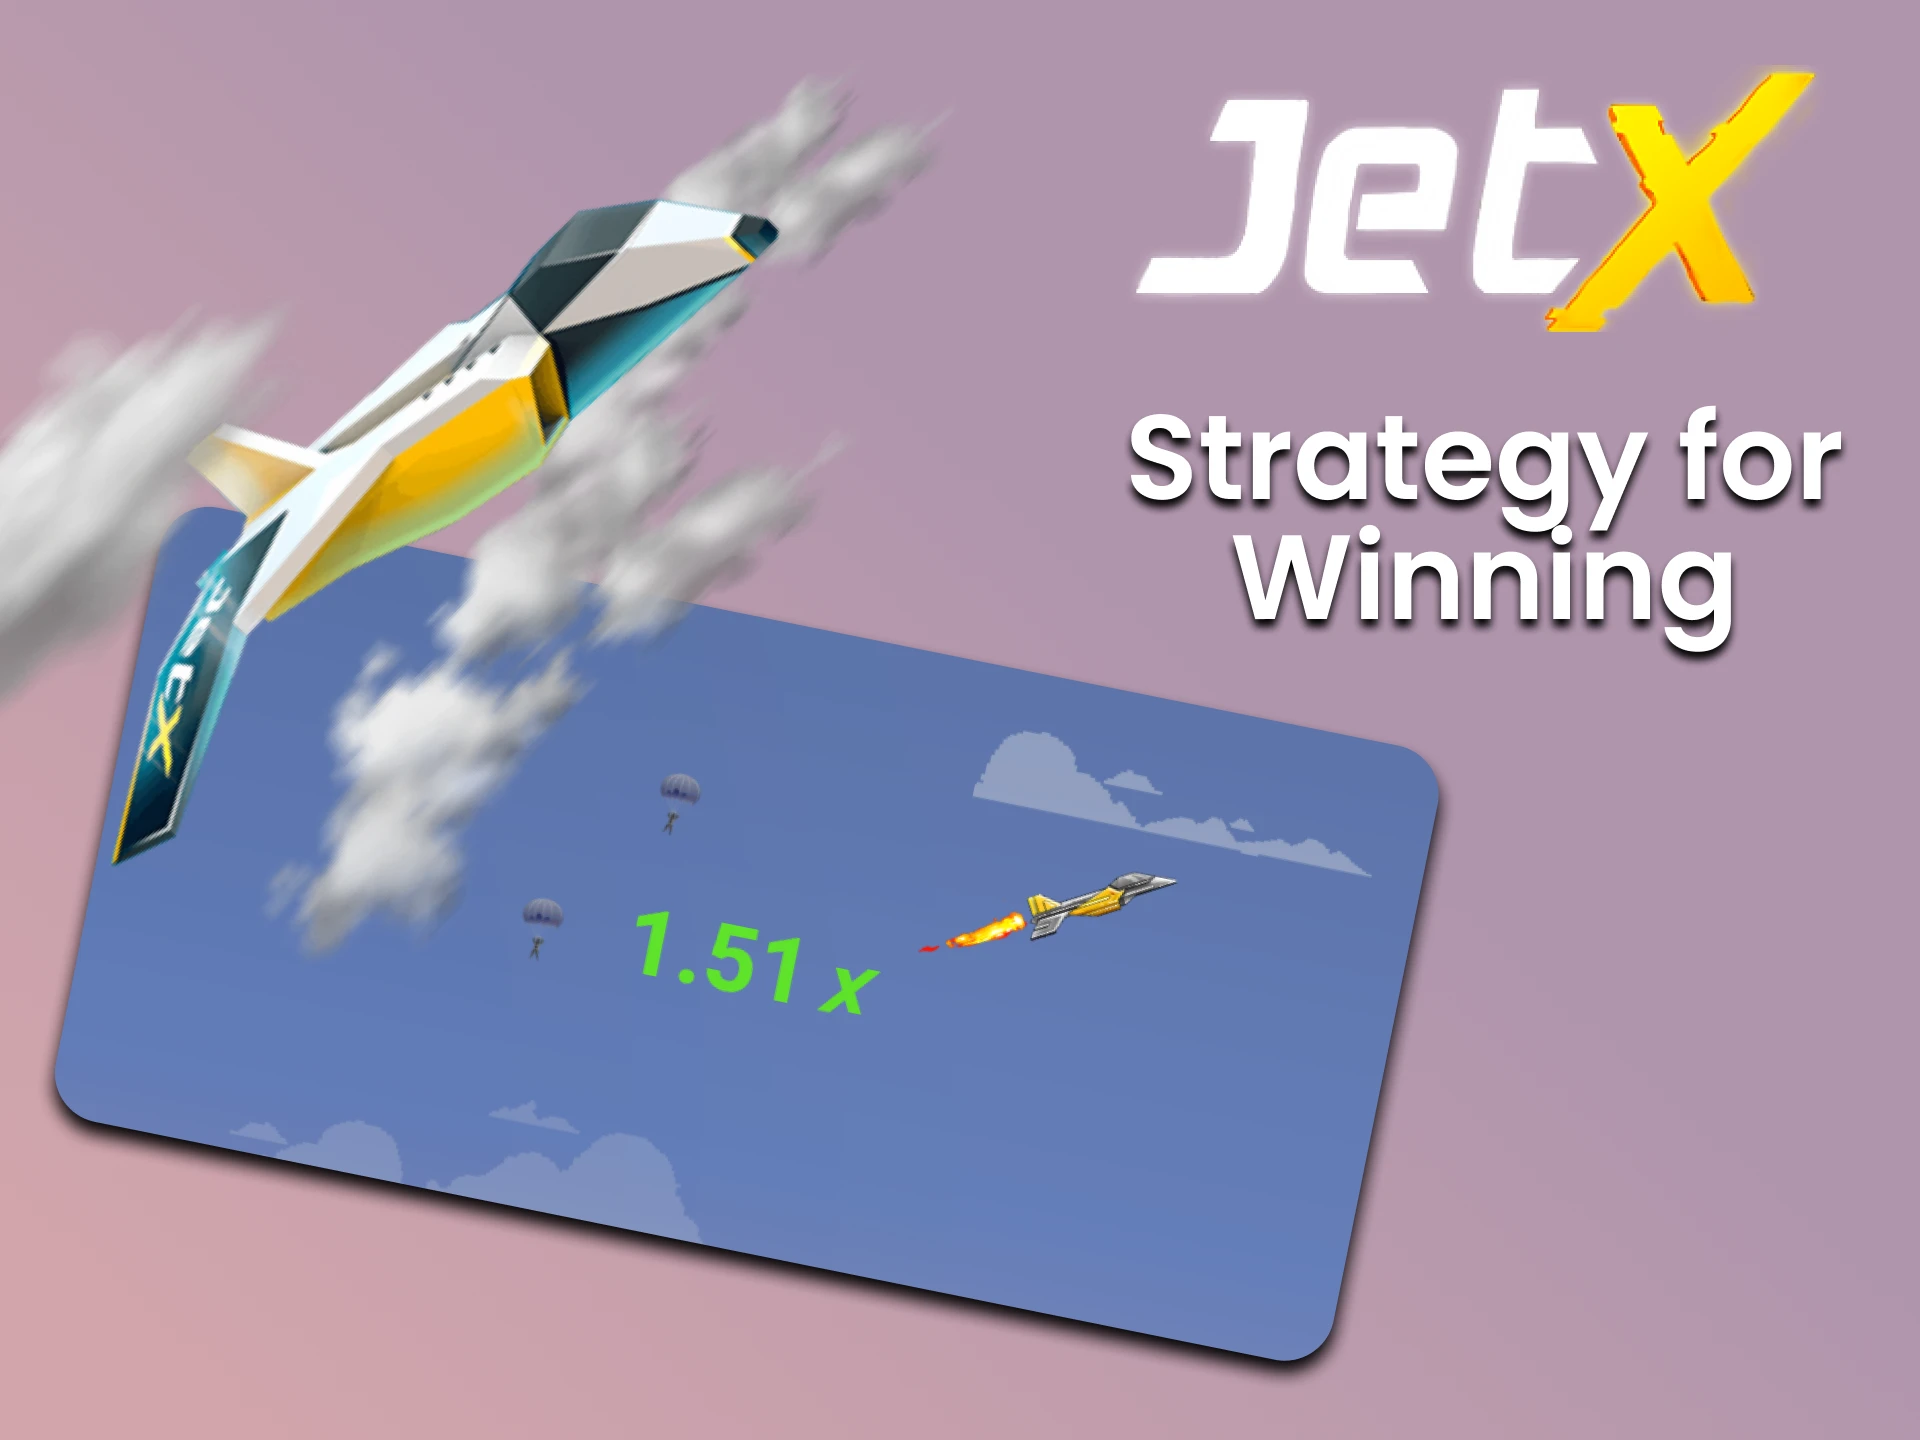 Choose a winning strategy for JetX.